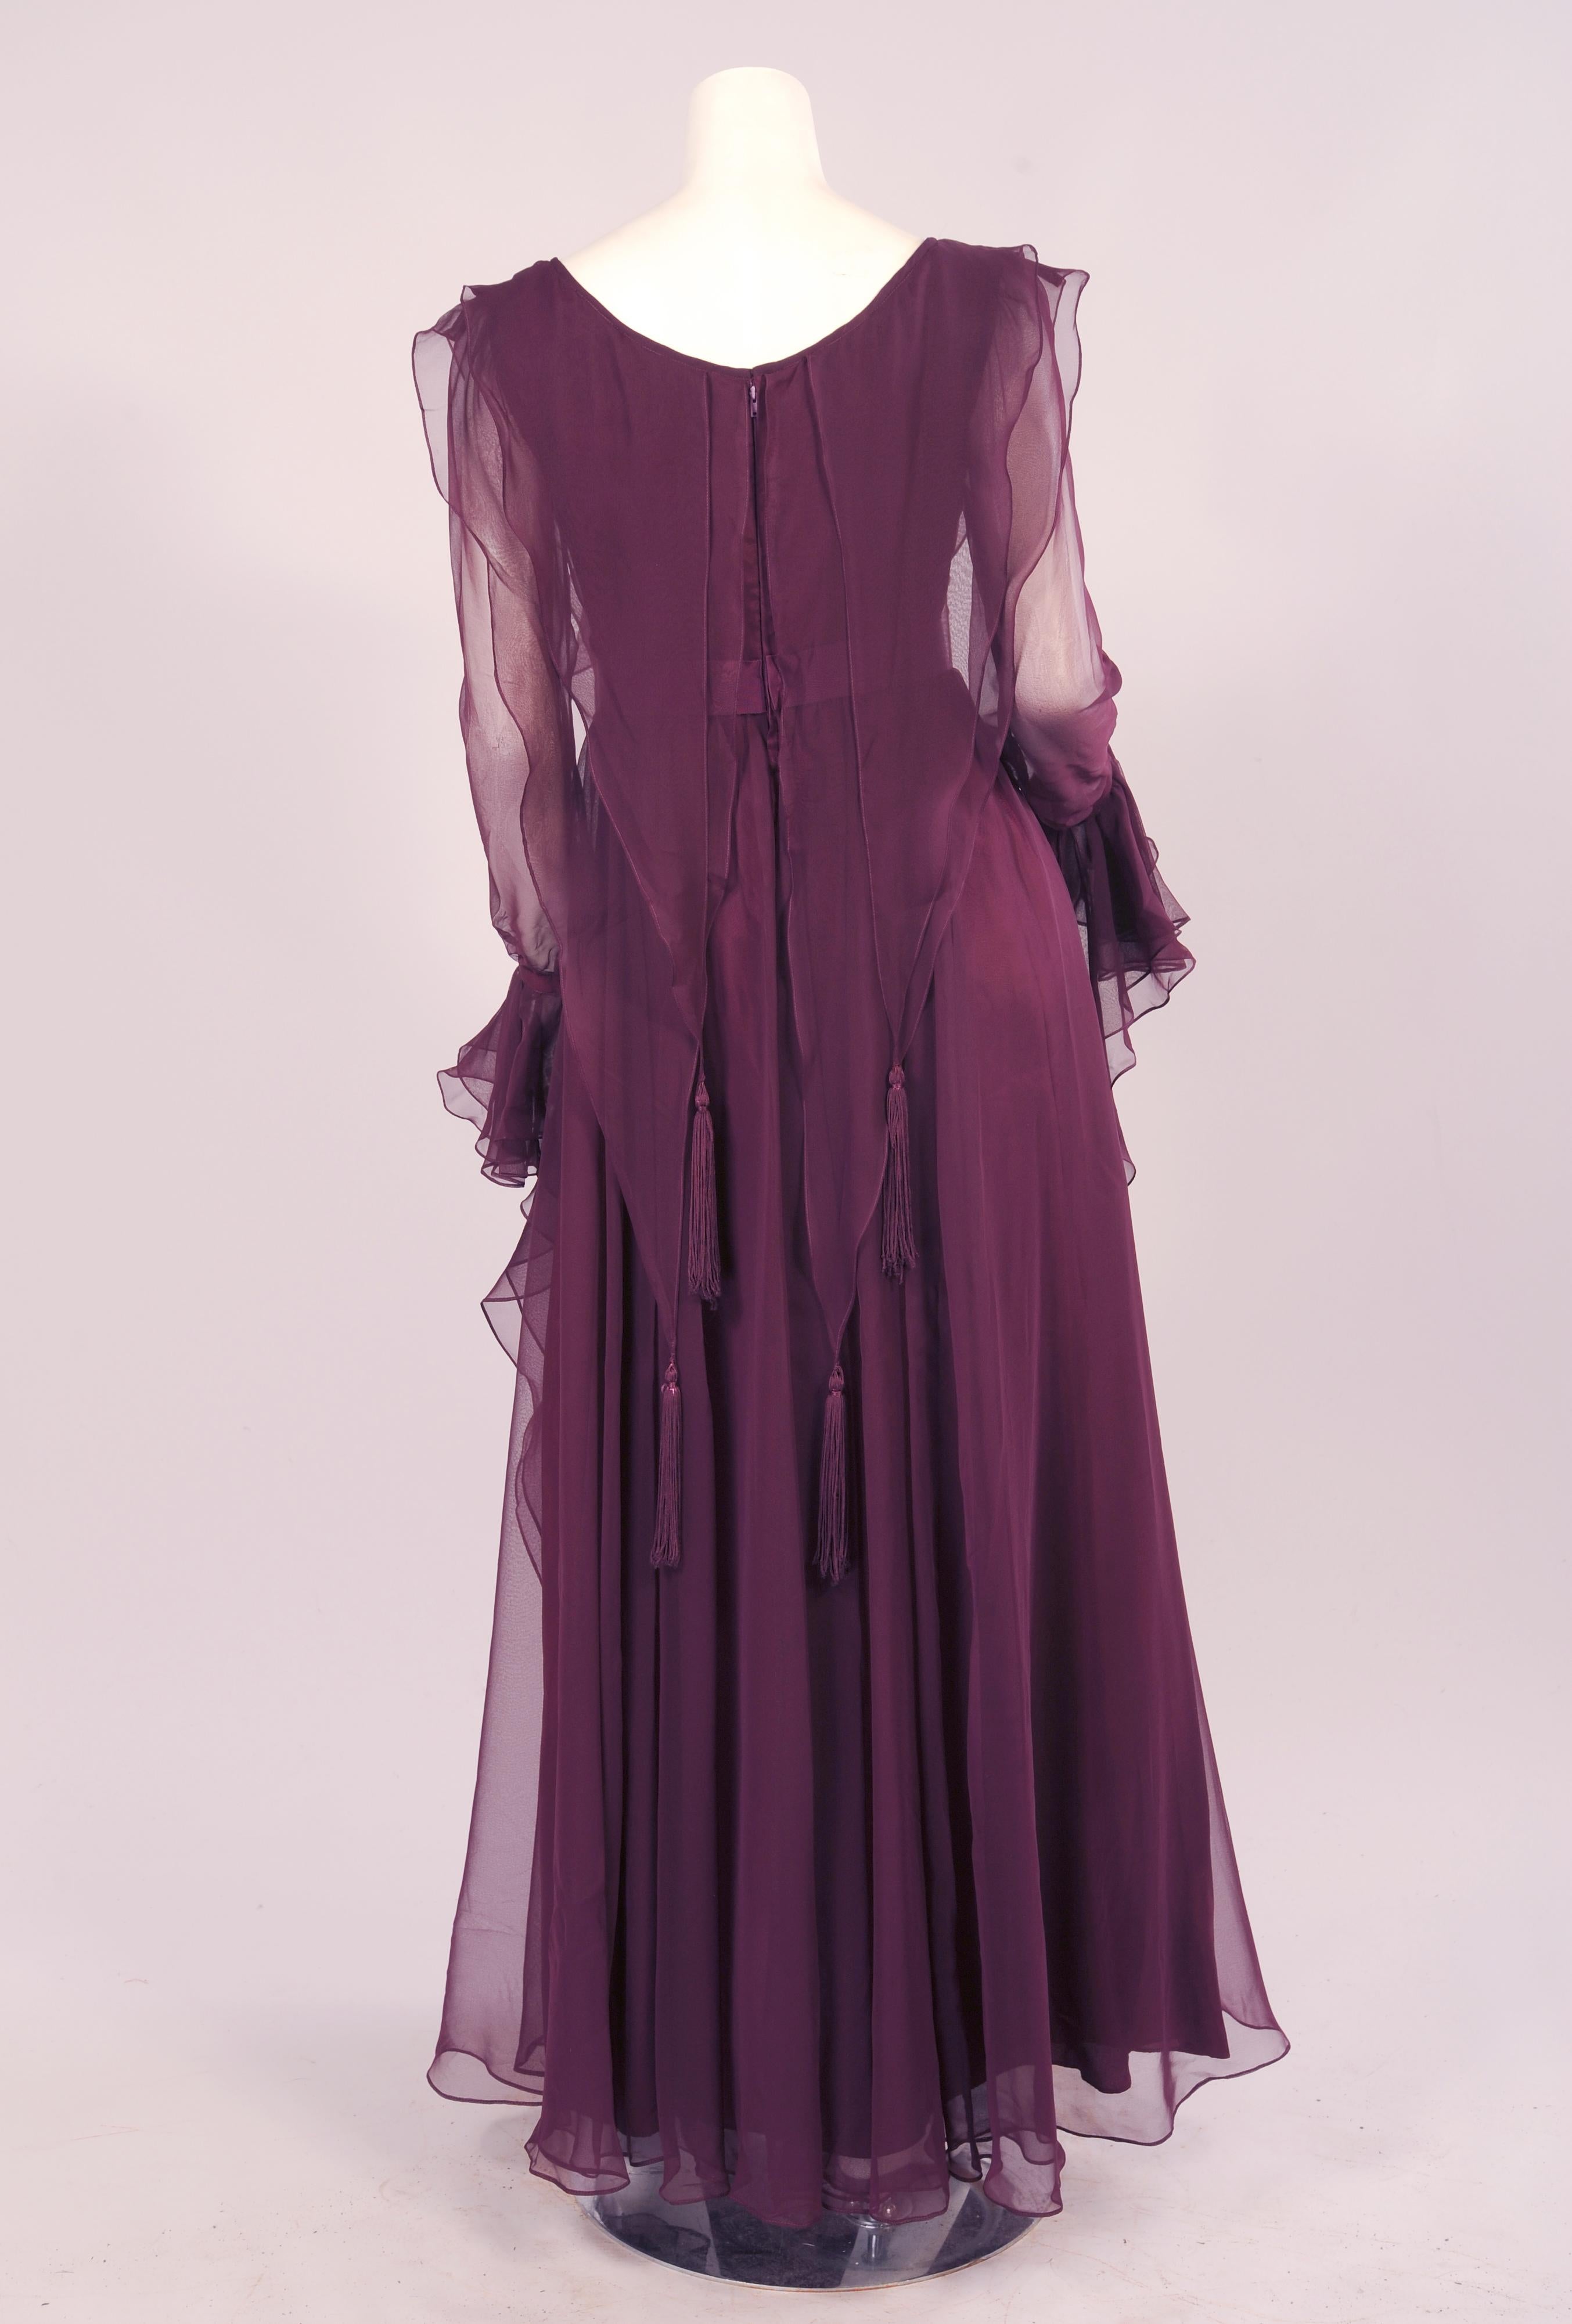 Black  Jean Varon 1970's Aubergine Chiffon Evening Dress Ruffles Ribbons and Tassels